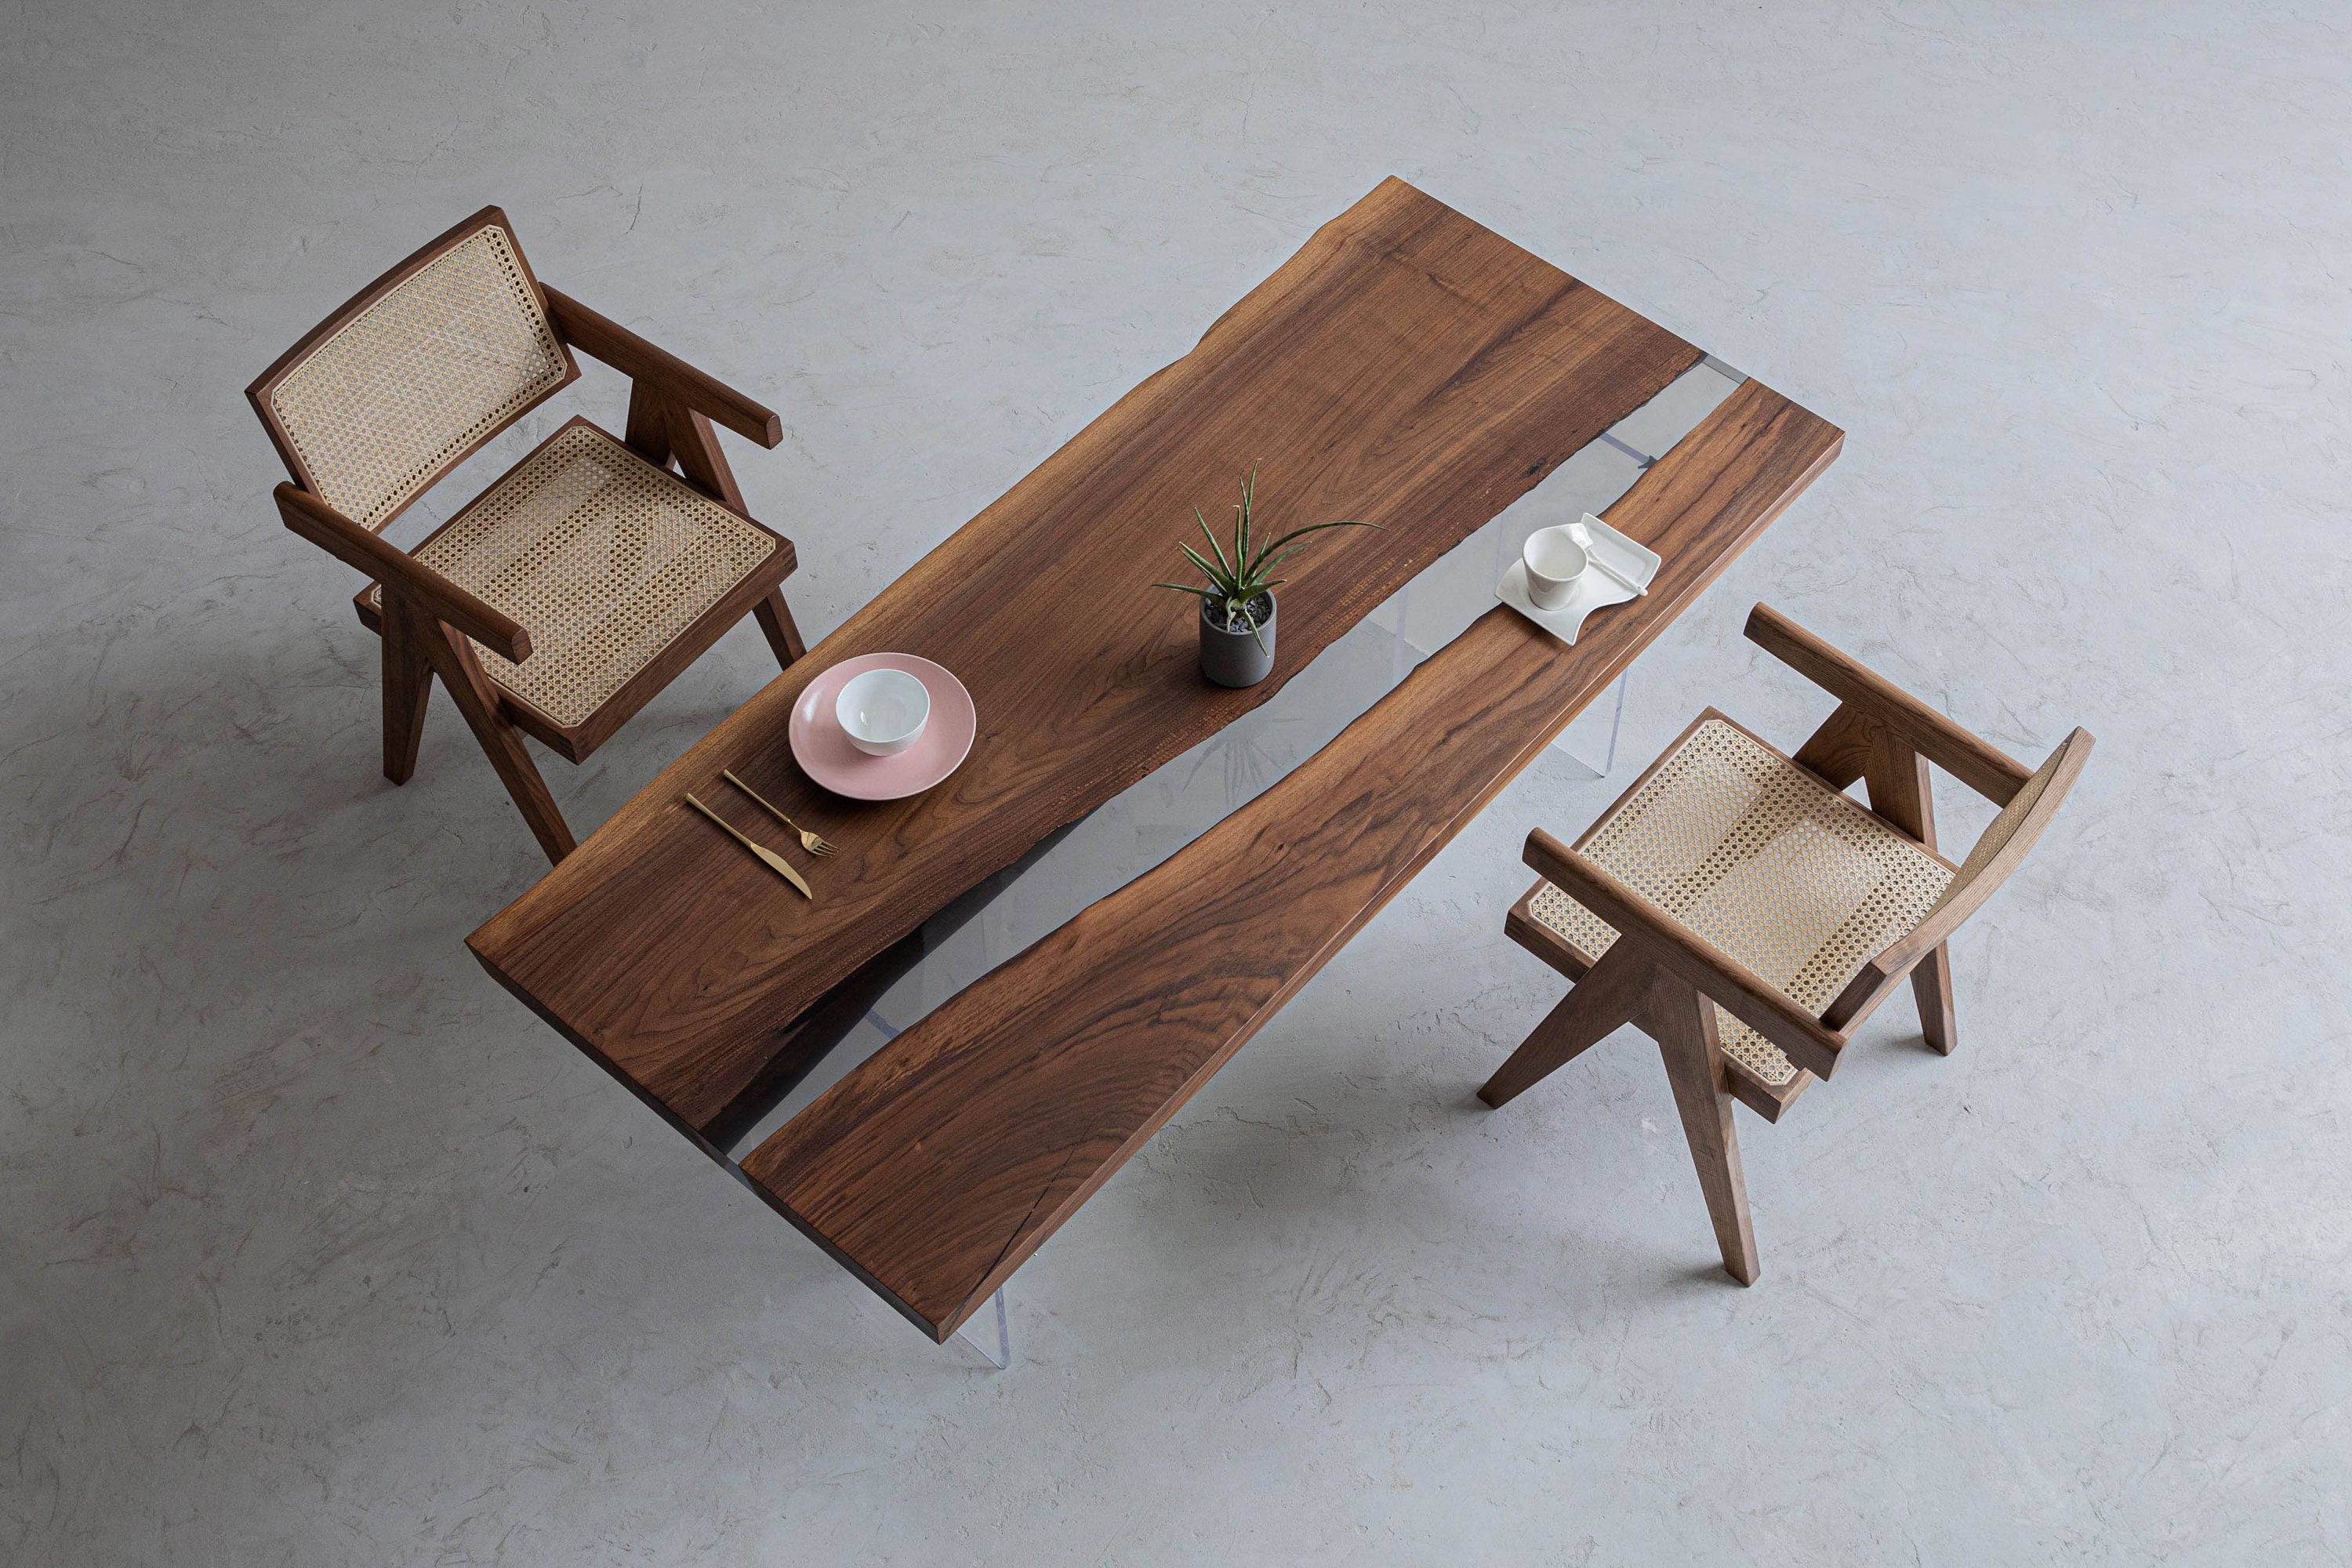 Handgjort epoxibord, Transparent Furniture Vivid Edge, Special Epoxy Wood Resin bord